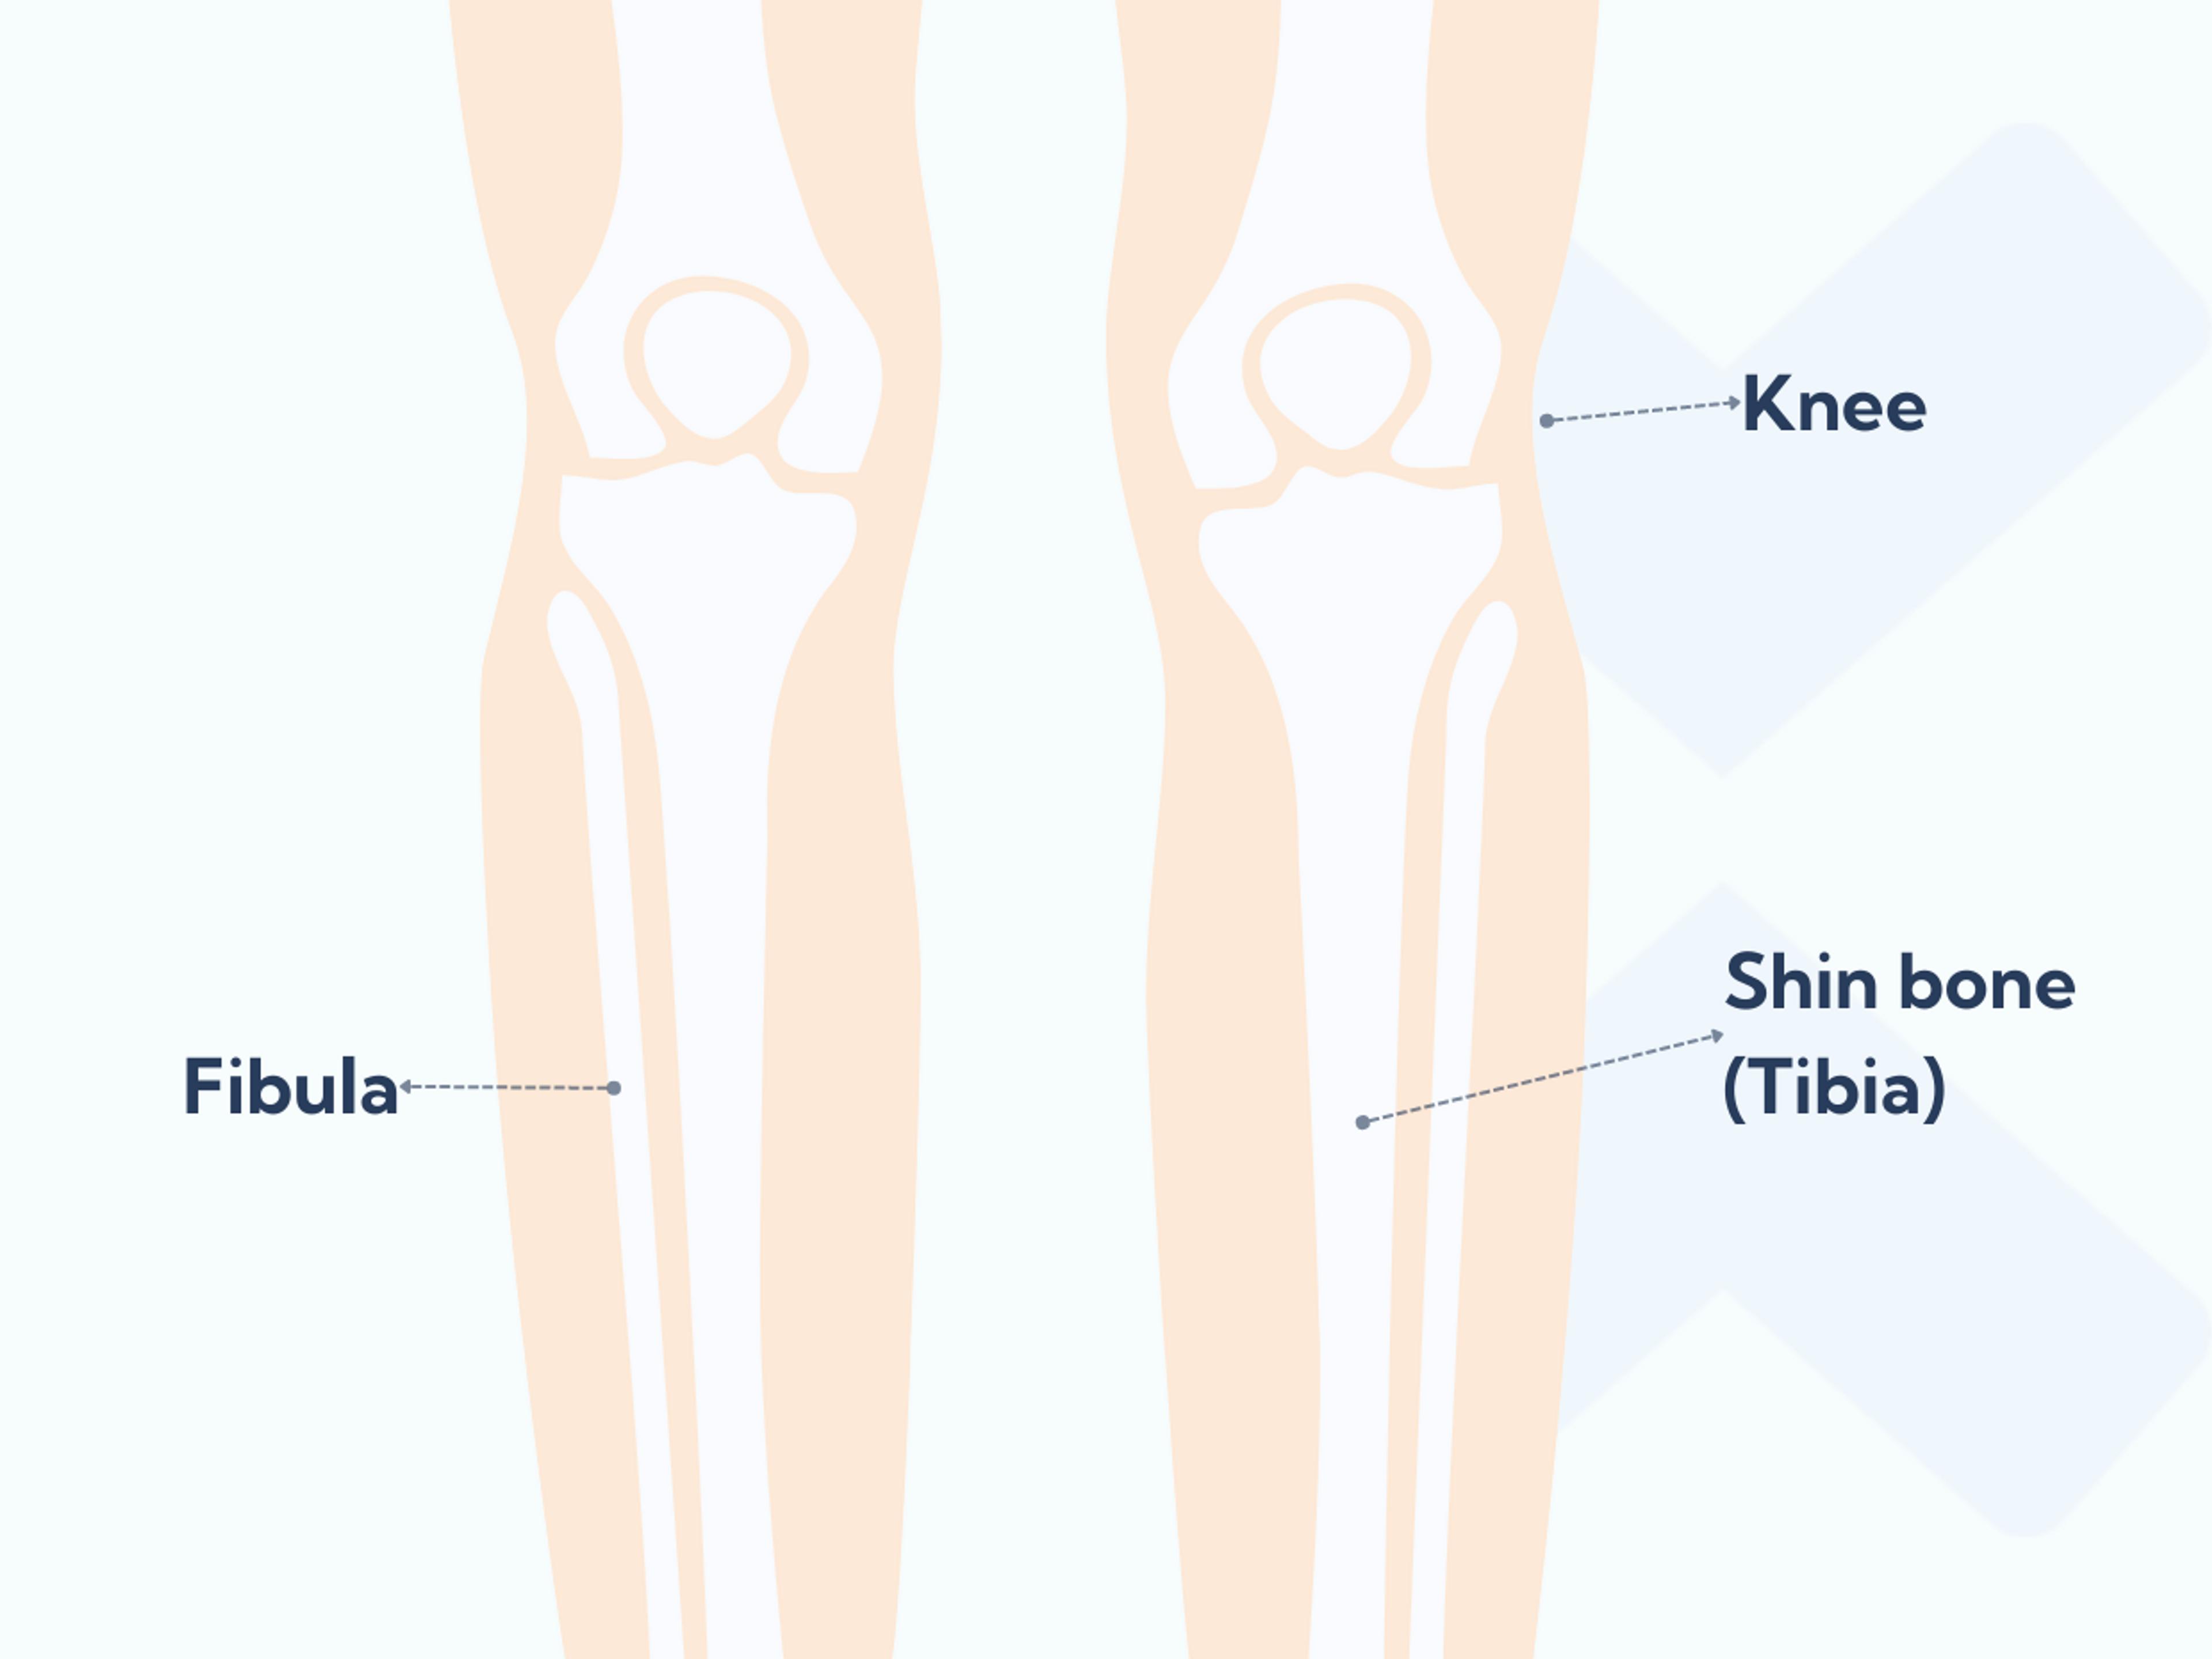 Bones of the lower leg - the shinbone (tibia) and fibula rests on the foot.